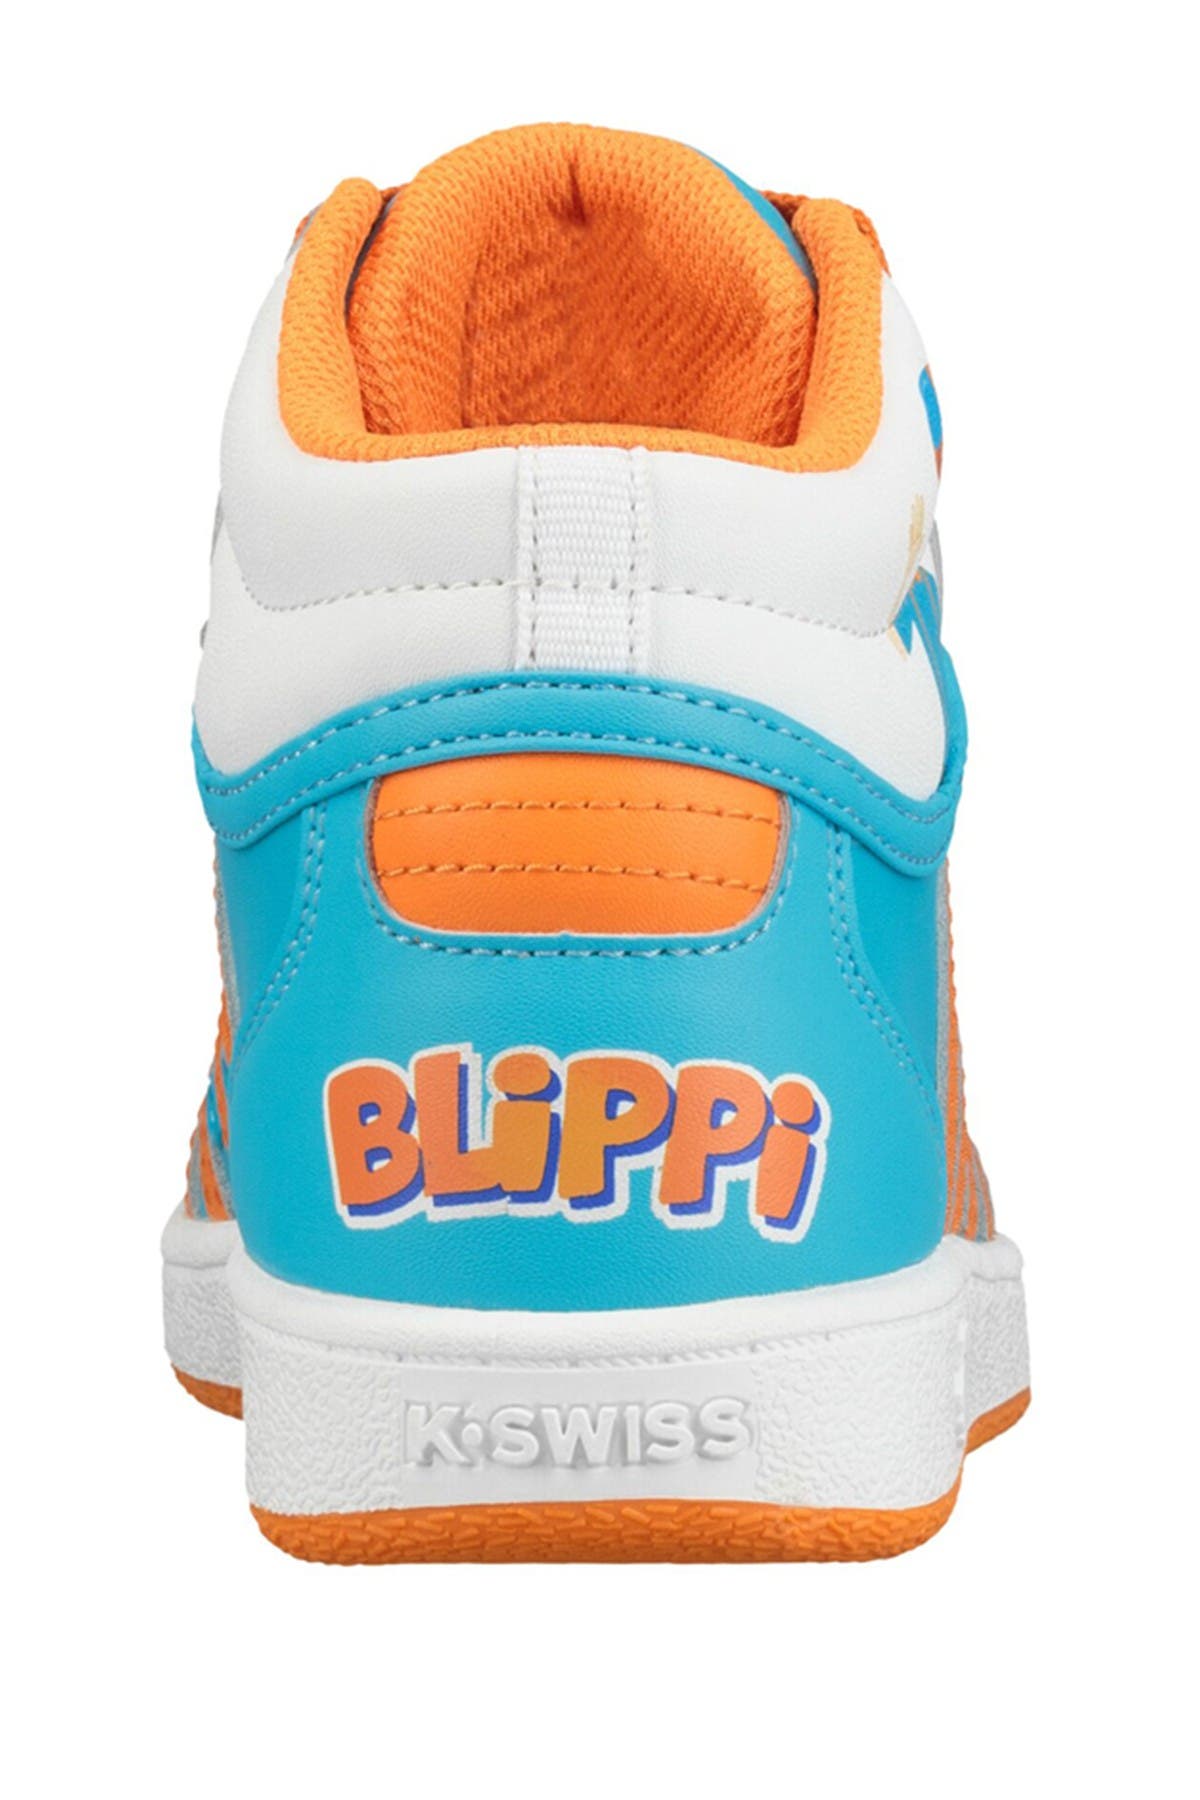 blippi shoes for sale